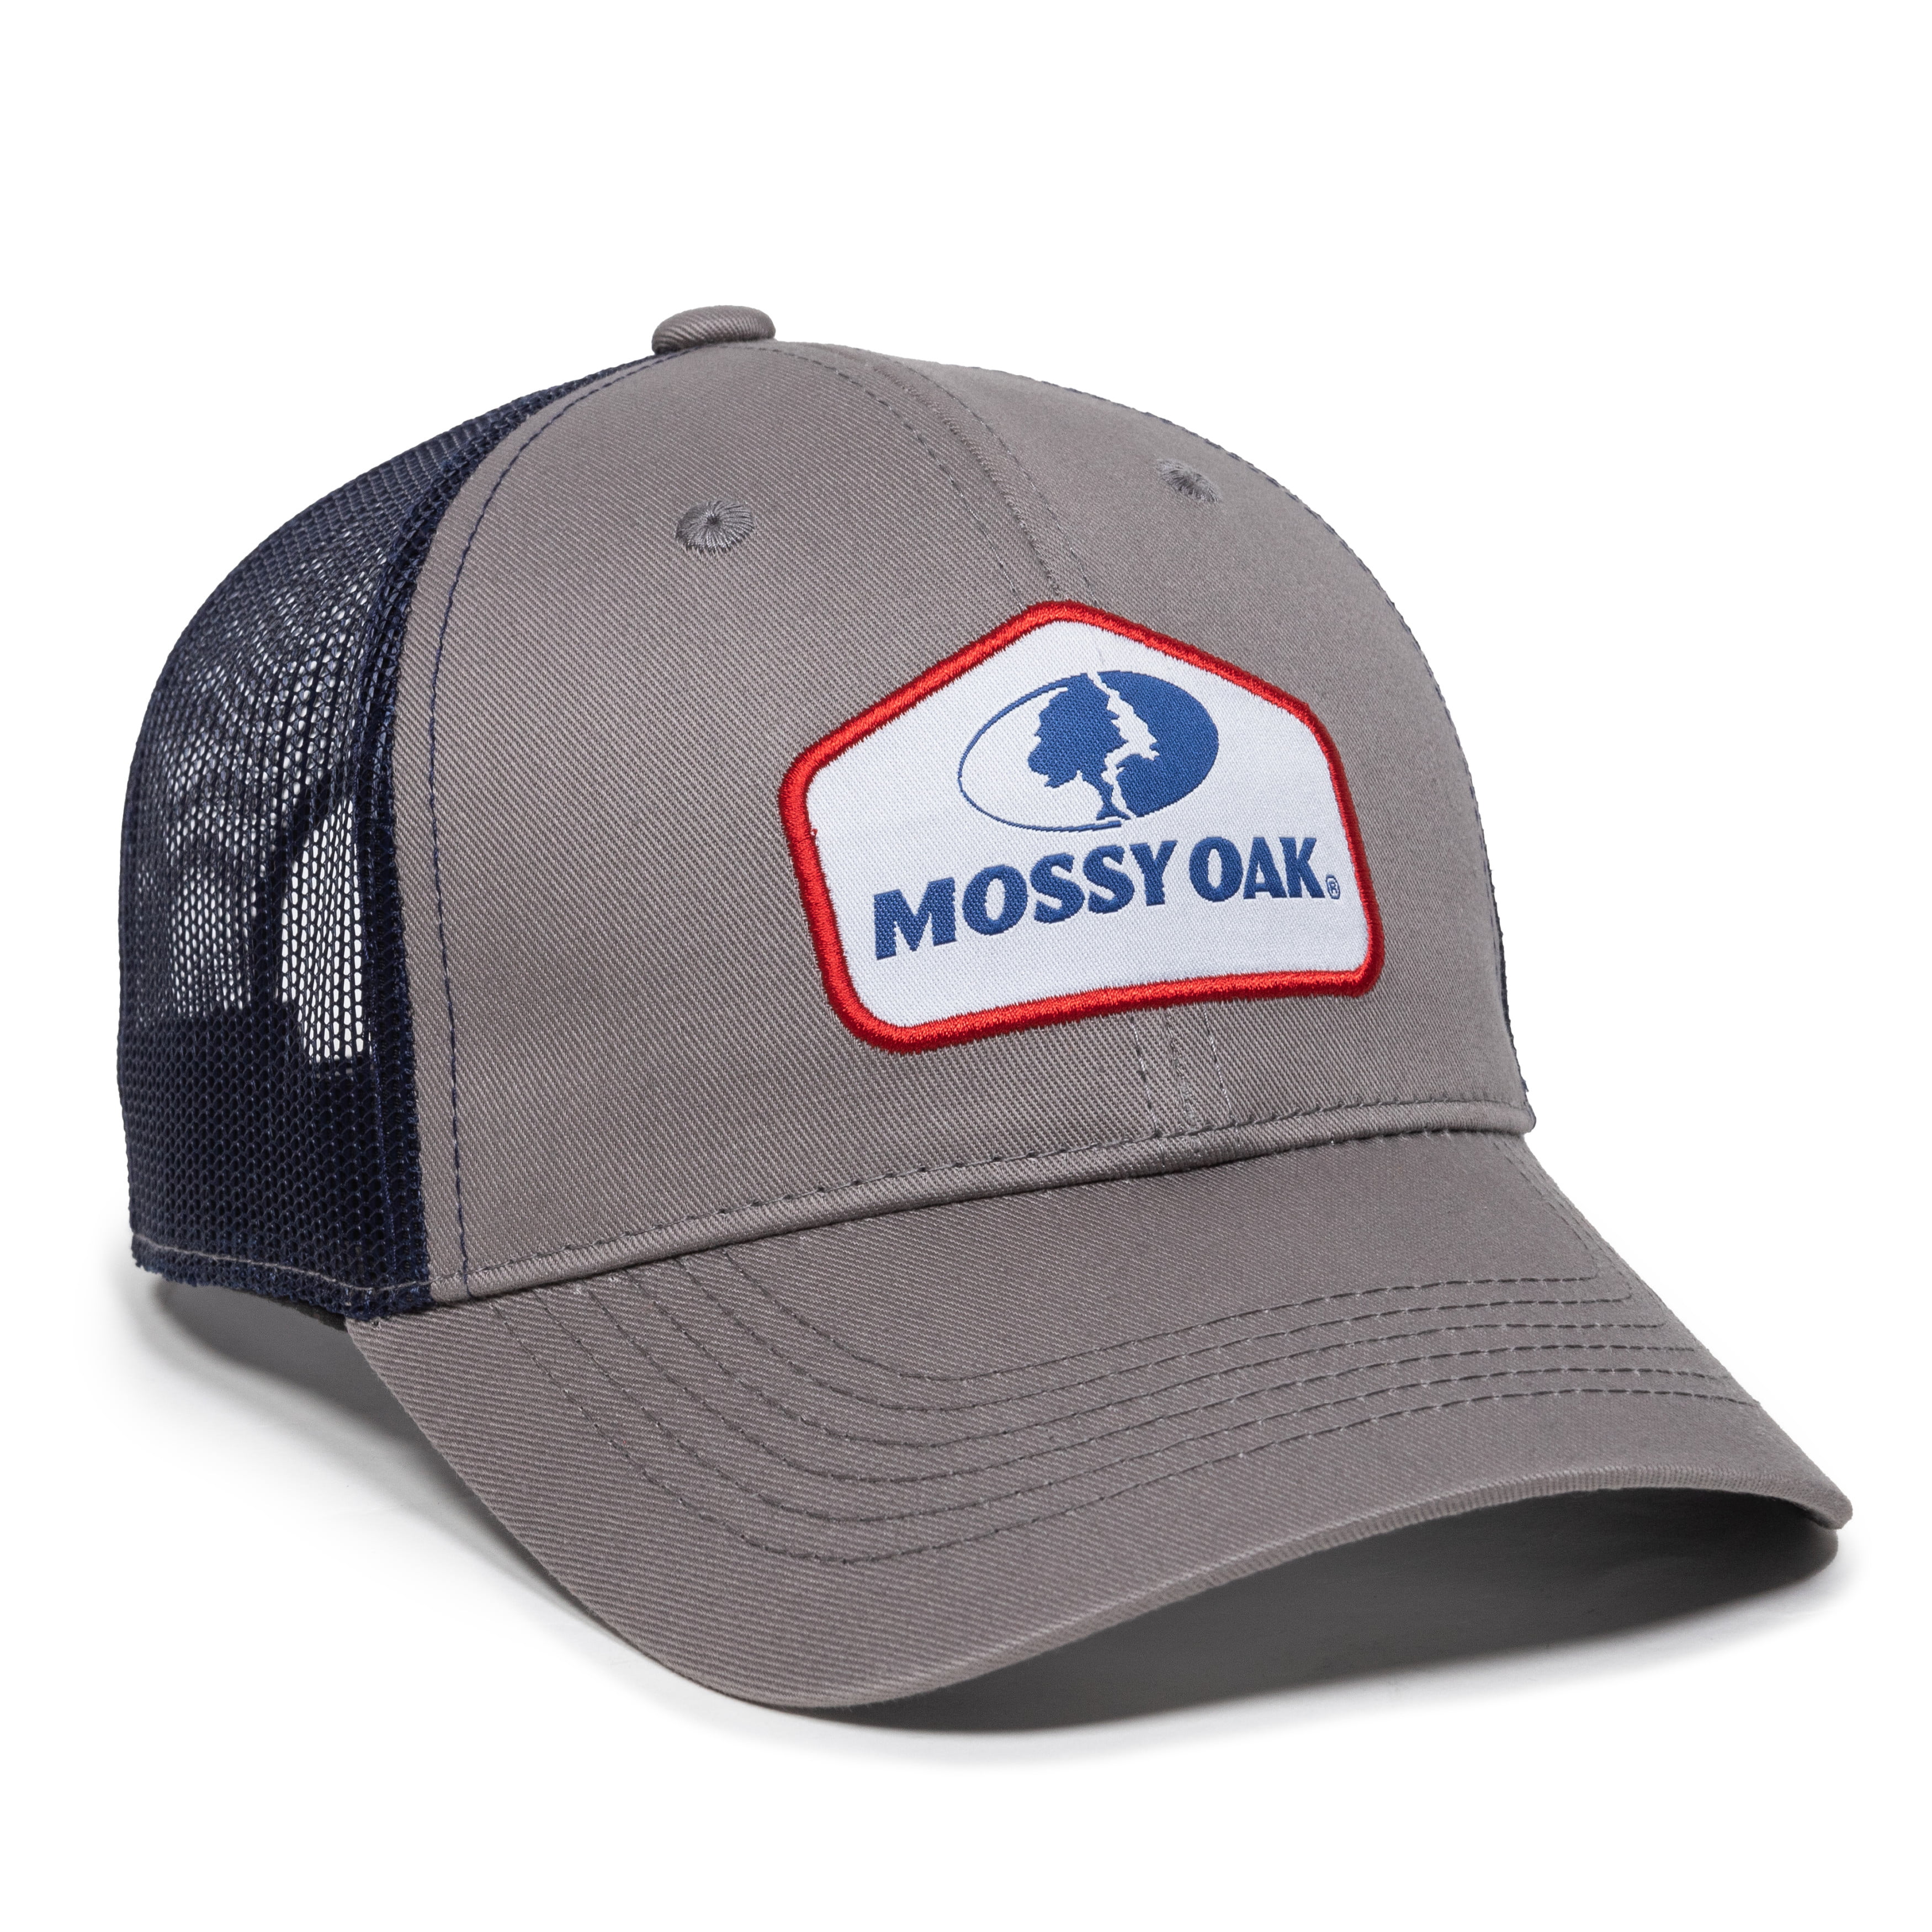 Mossy Oak Fishing Structured Baseball Style Hat, Gray, Adult